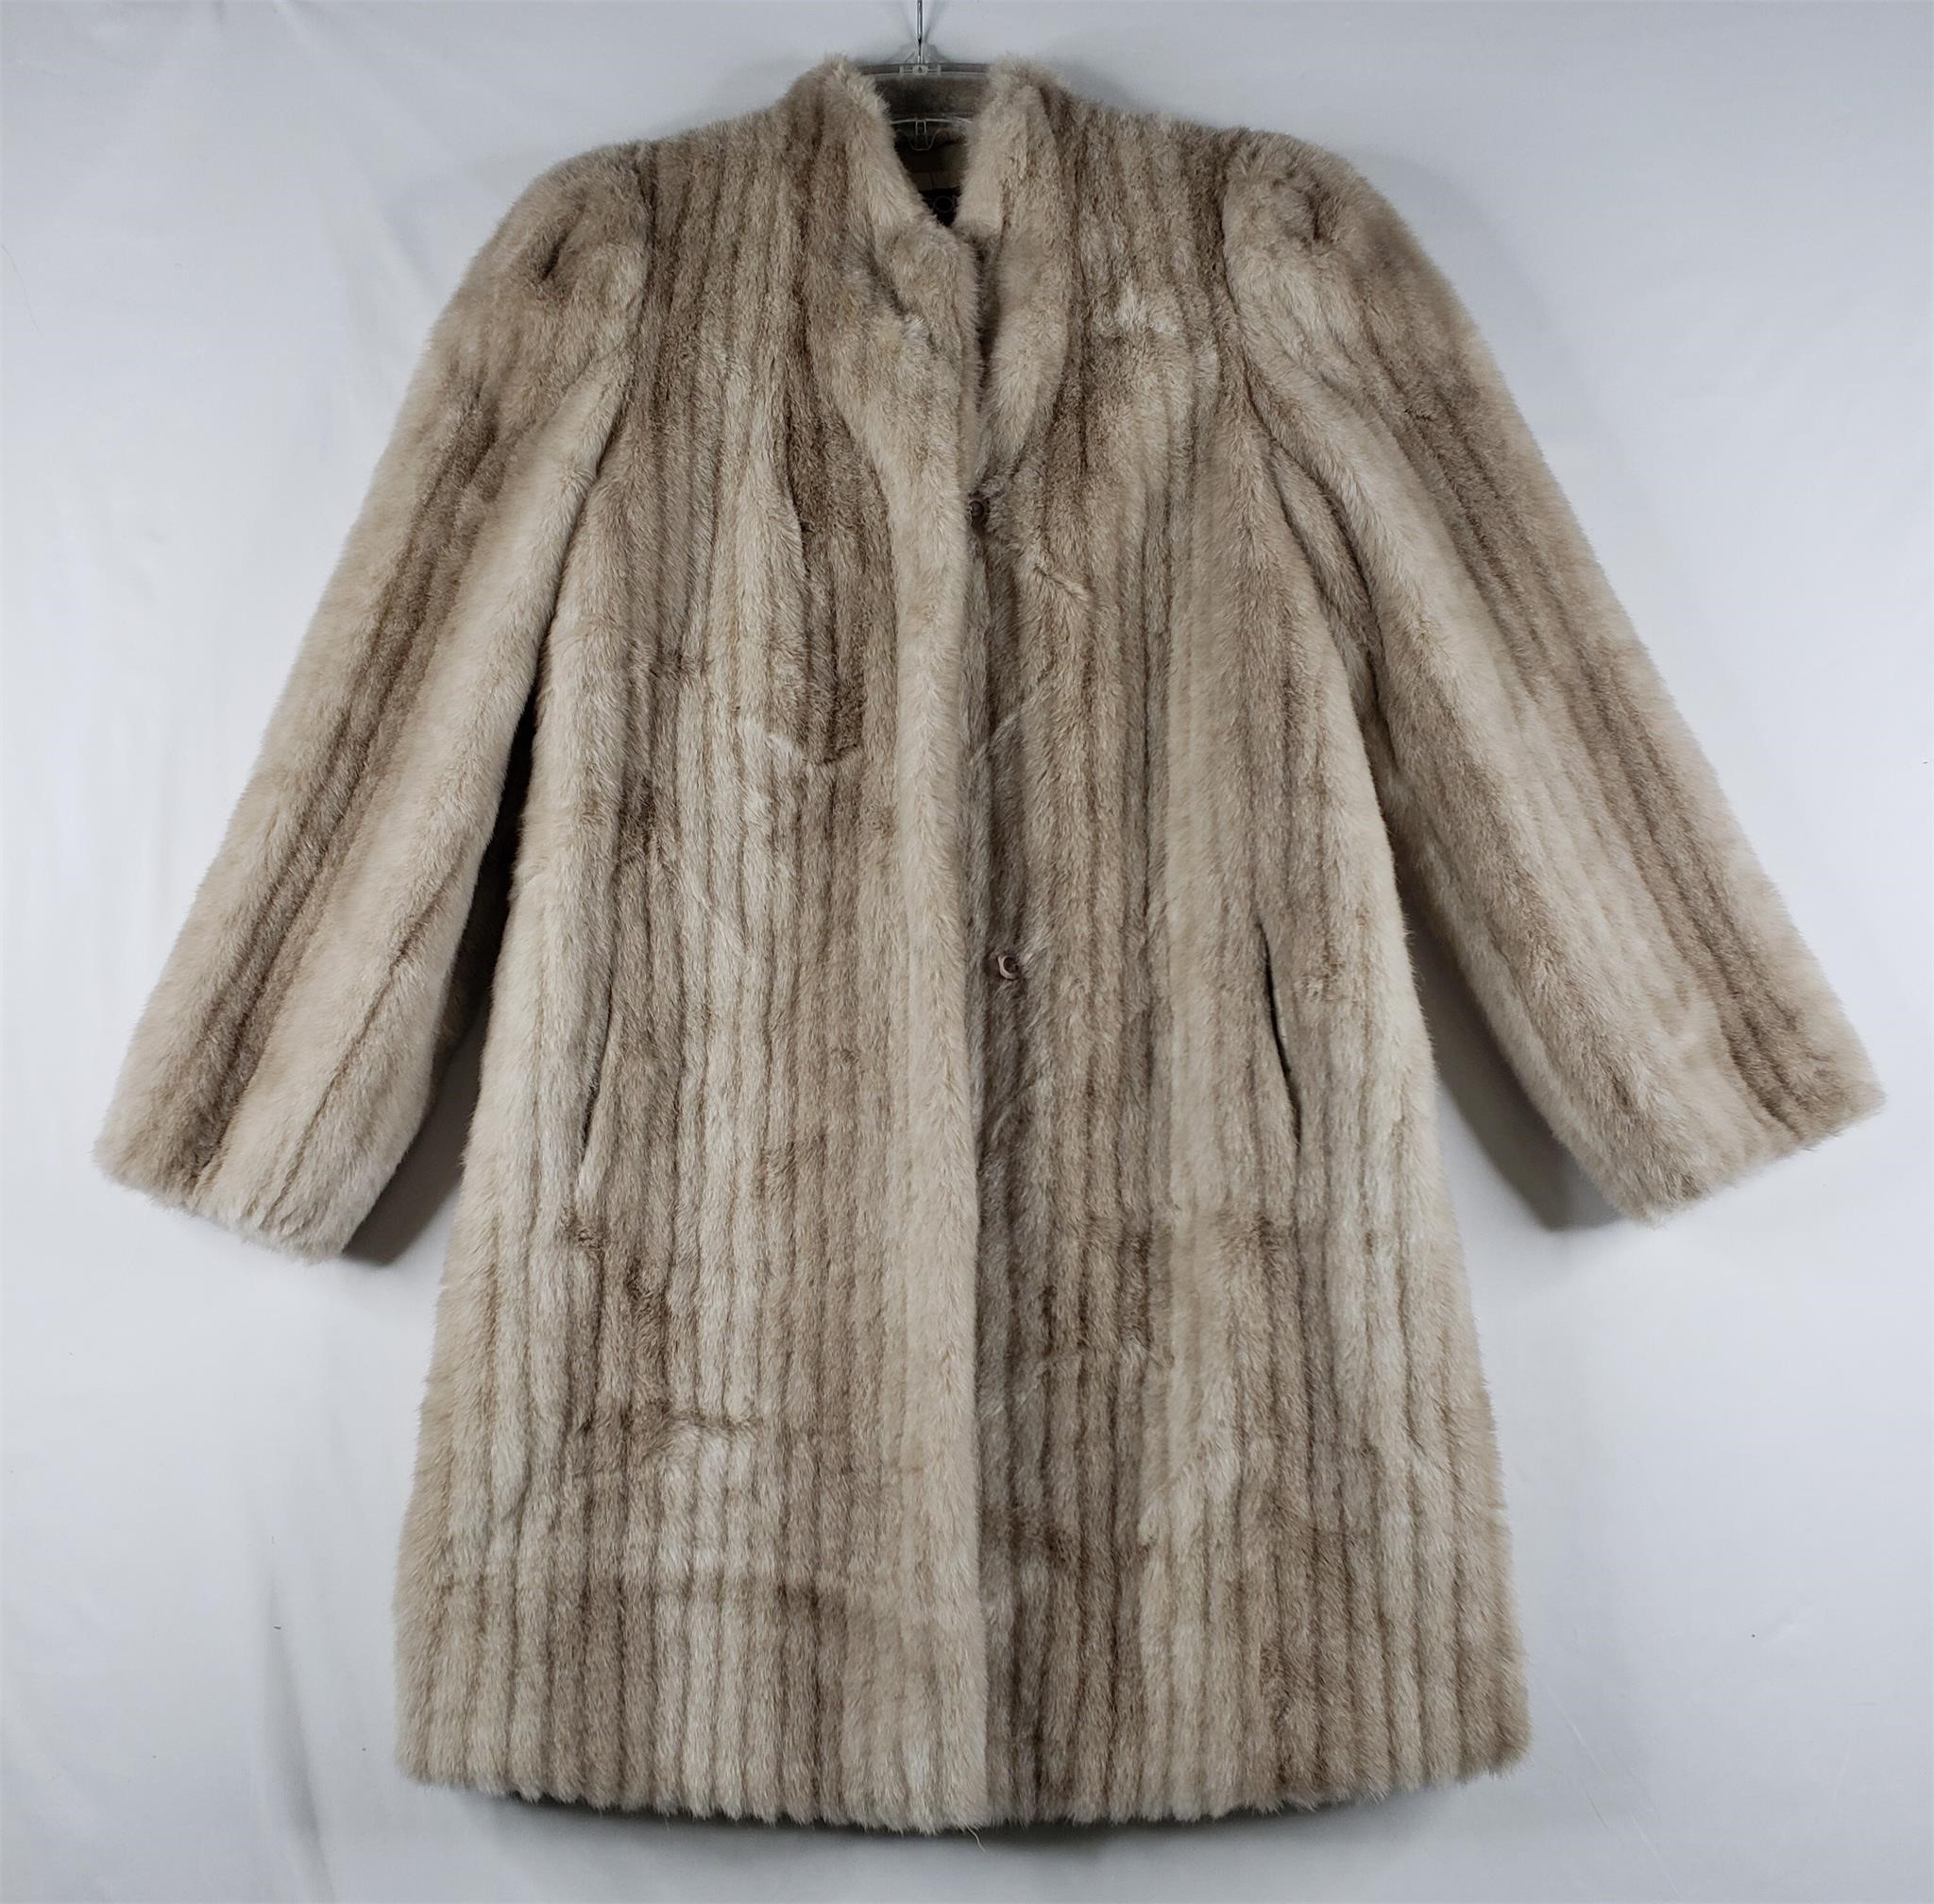 Sasson Juniors Women's Coat Fur/Faux Fur?